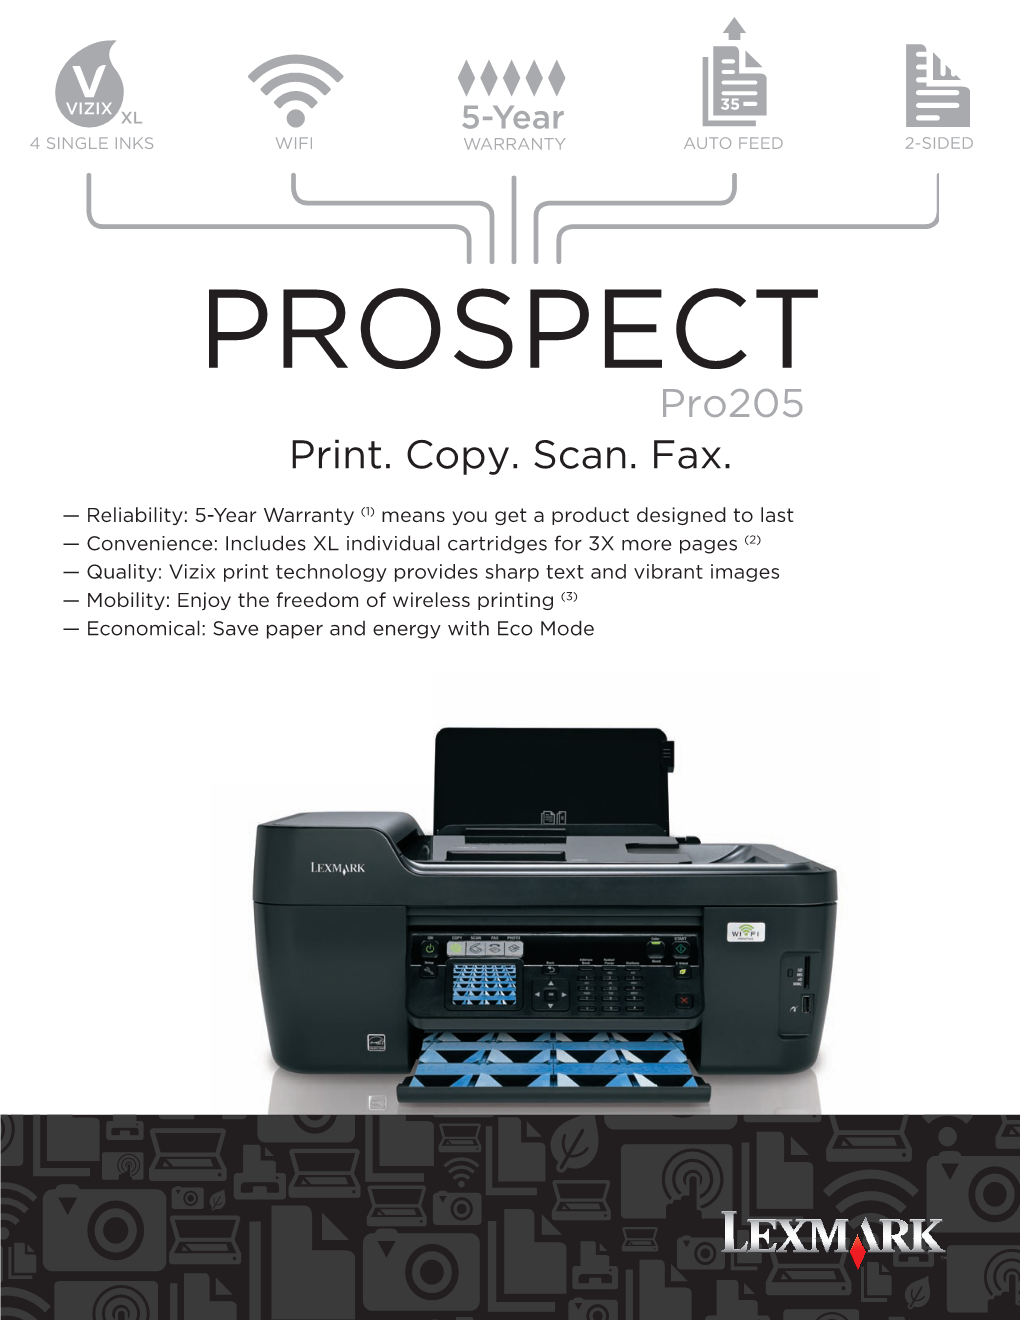 PROSPECT Pro205 Print